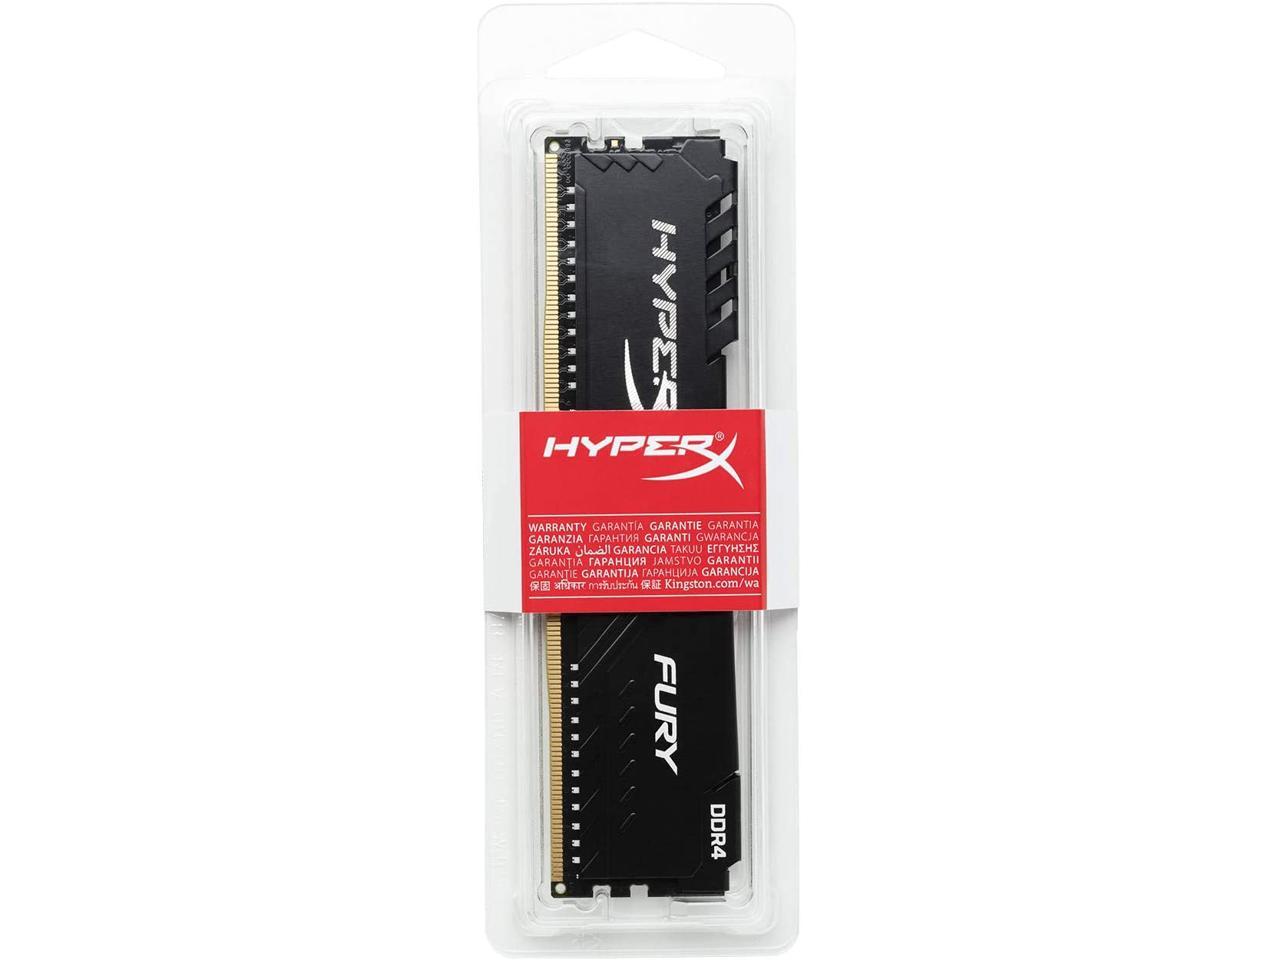 HyperX FURY 8GB 288-Pin DDR4 SDRAM DDR4 3200 (PC4 25600) Desktop Memory Model HX432C16FB3/8